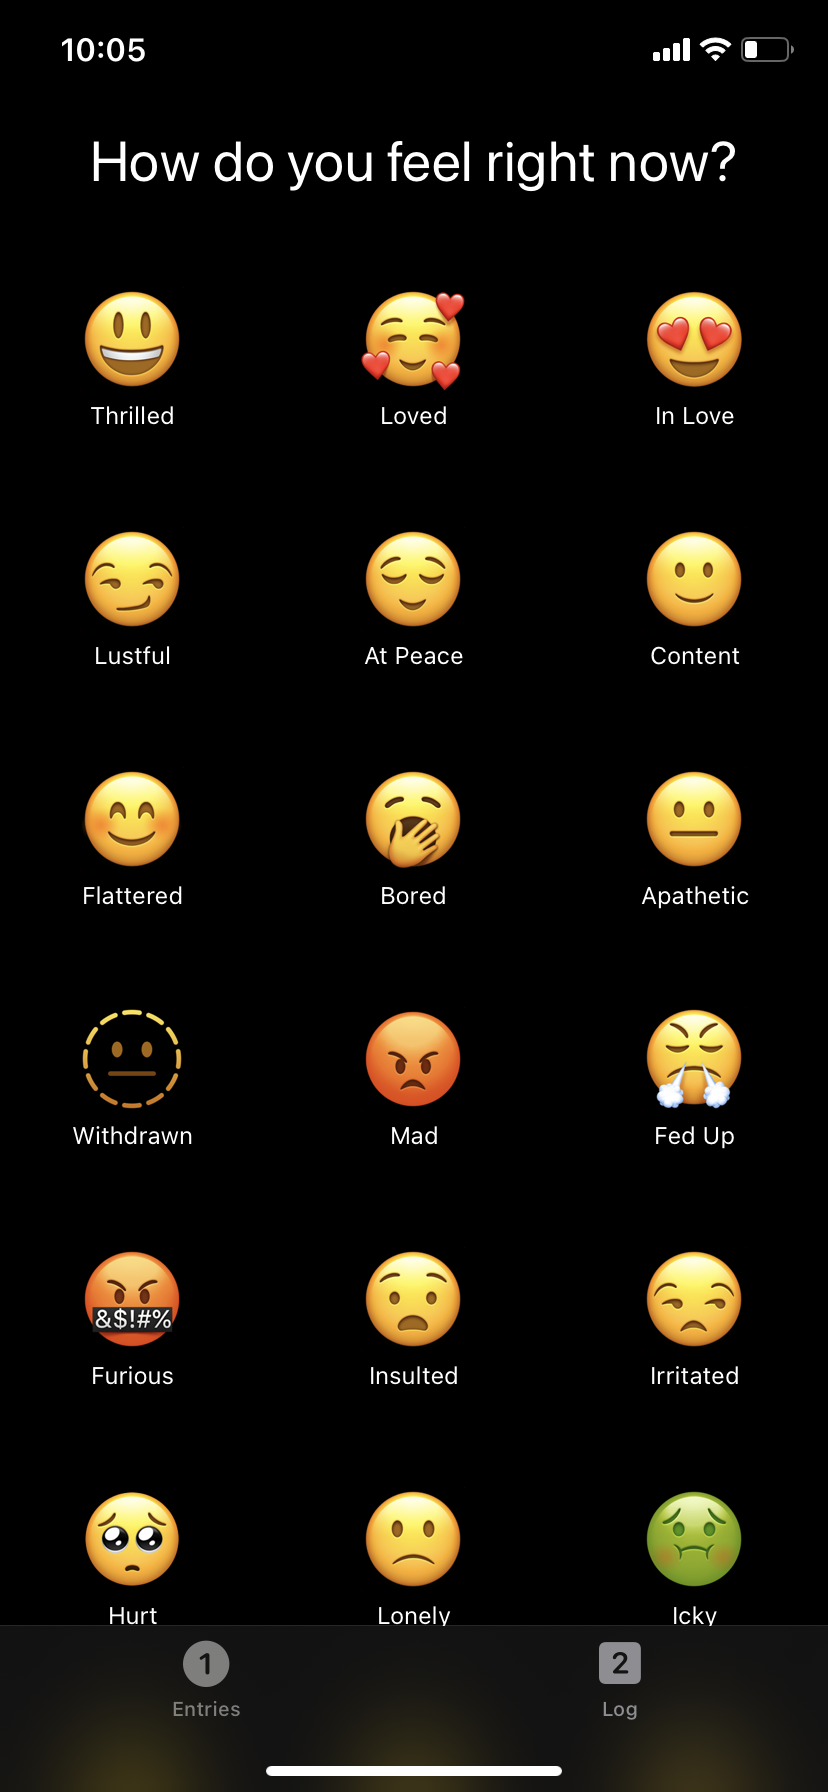 screenshot of emojis in a grid layout.